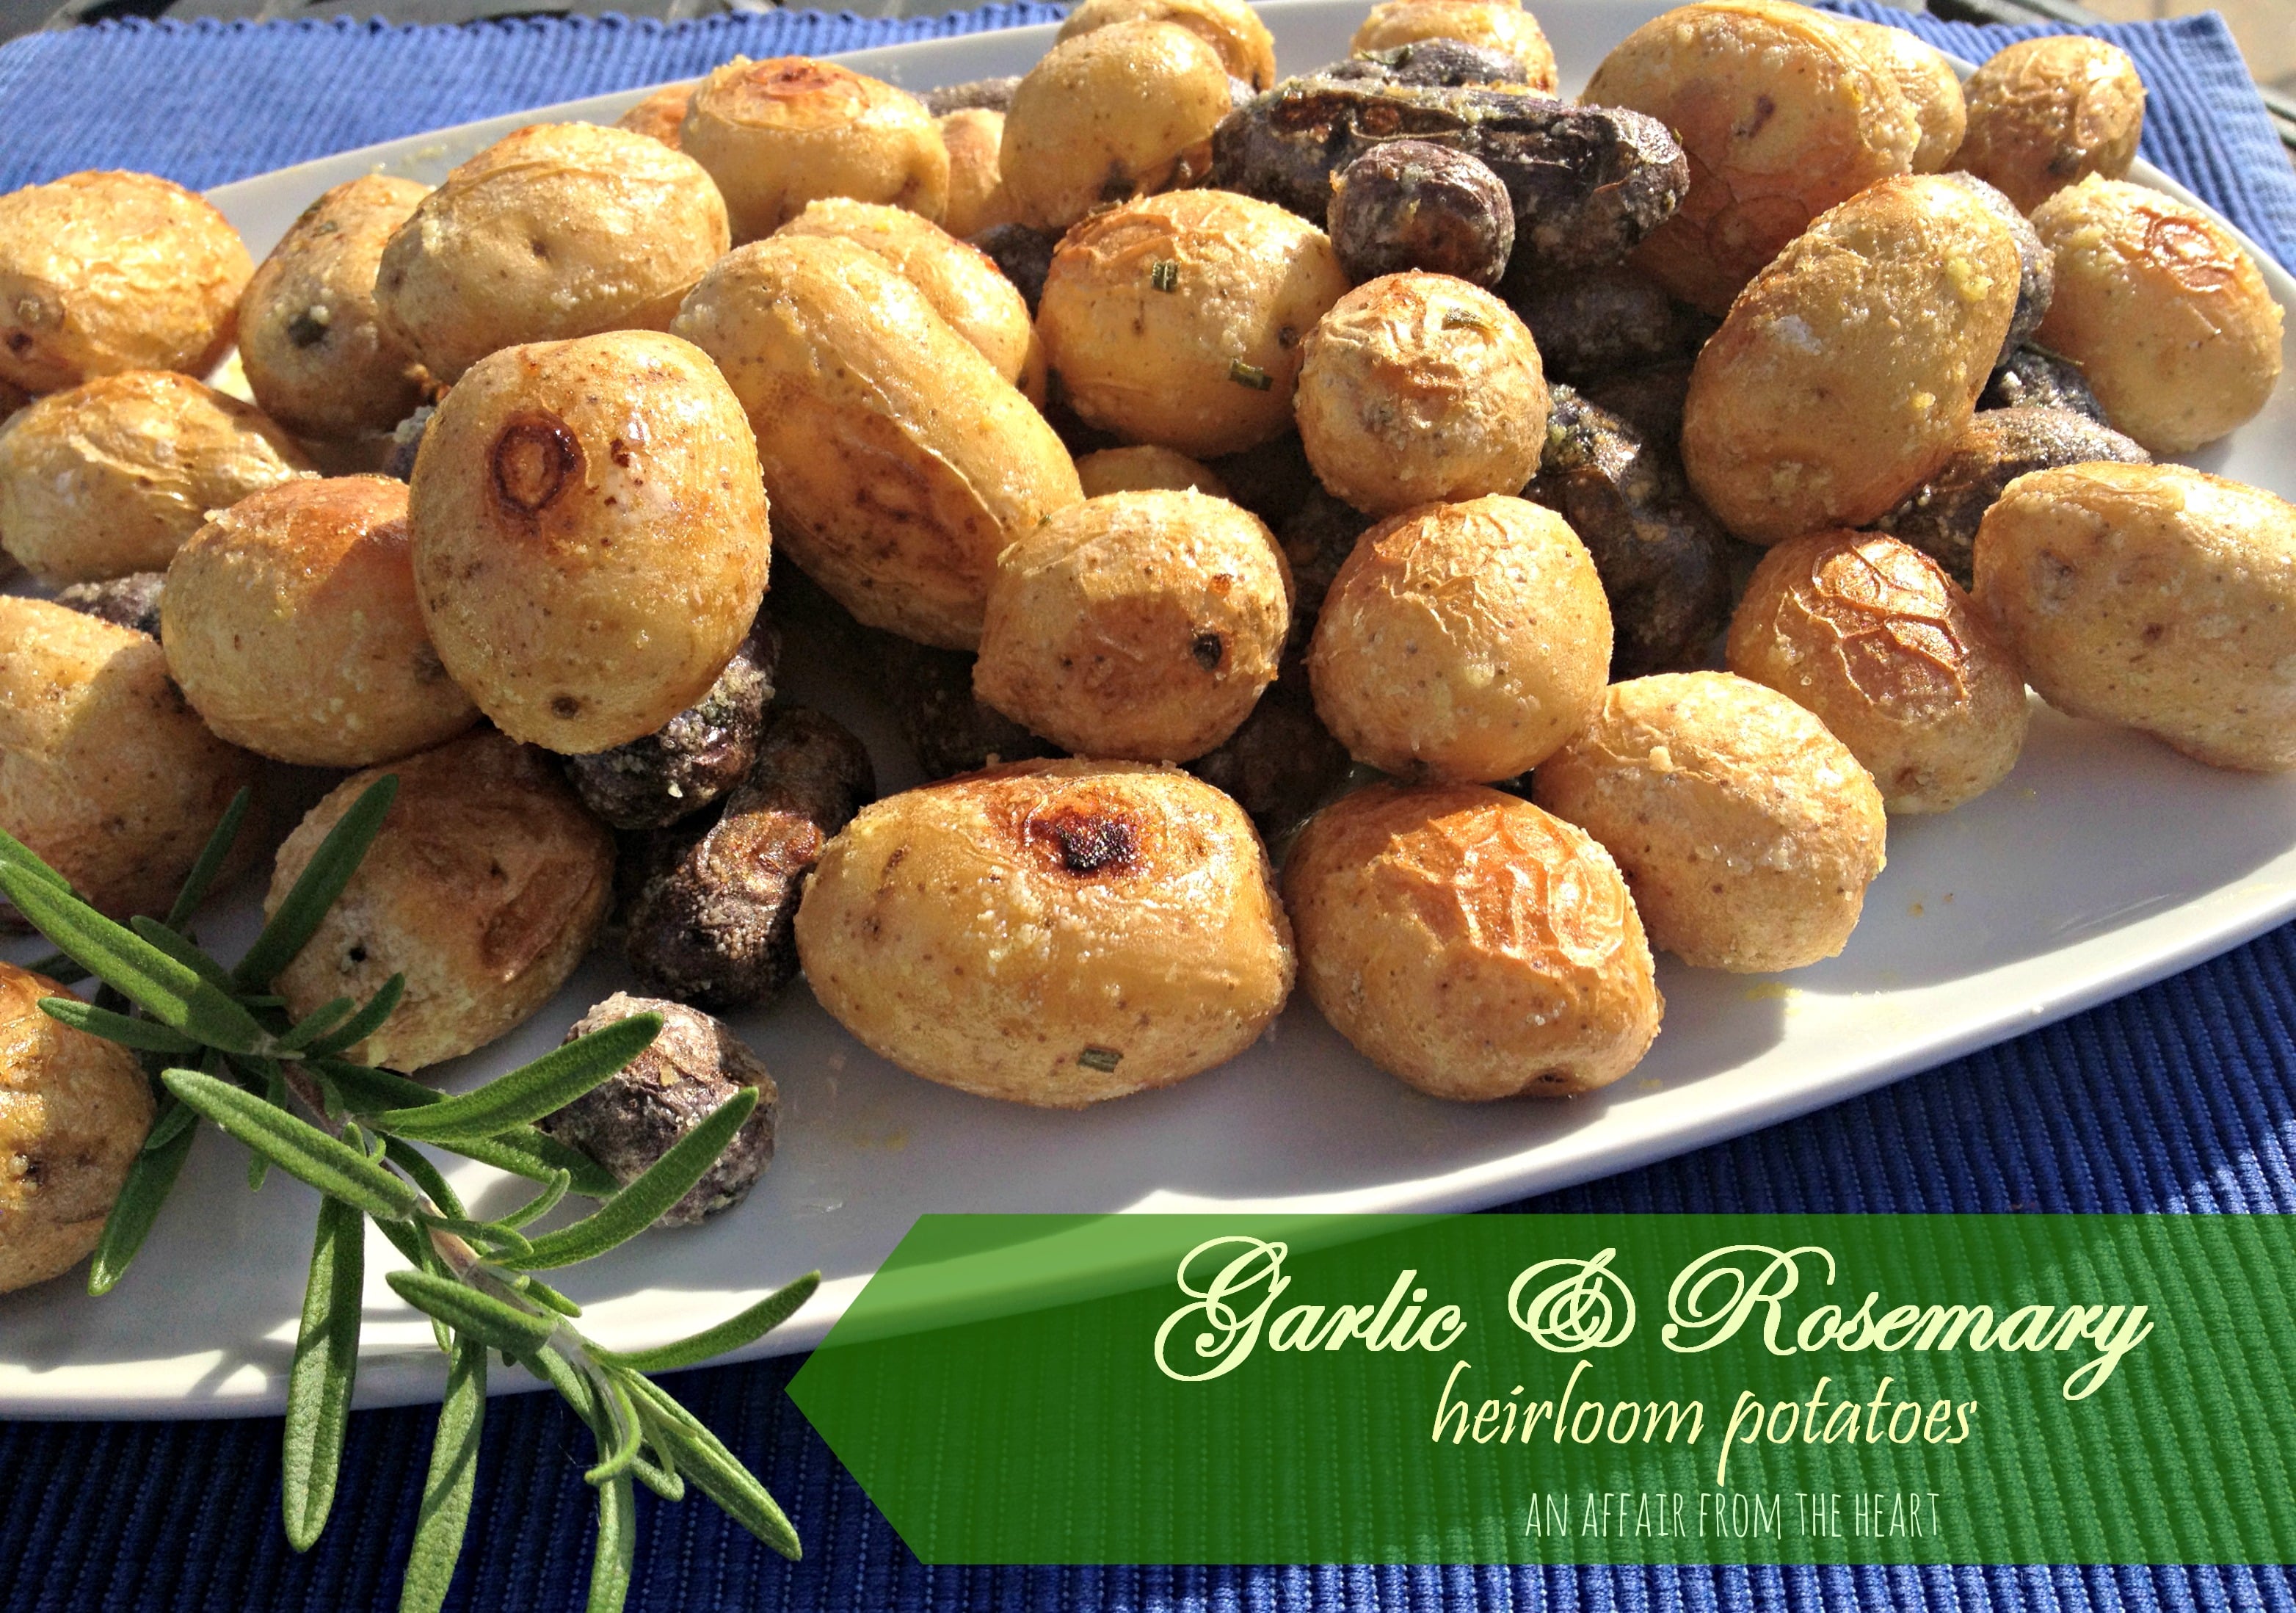 Garlic & Rosemary Heirloom Potatoes